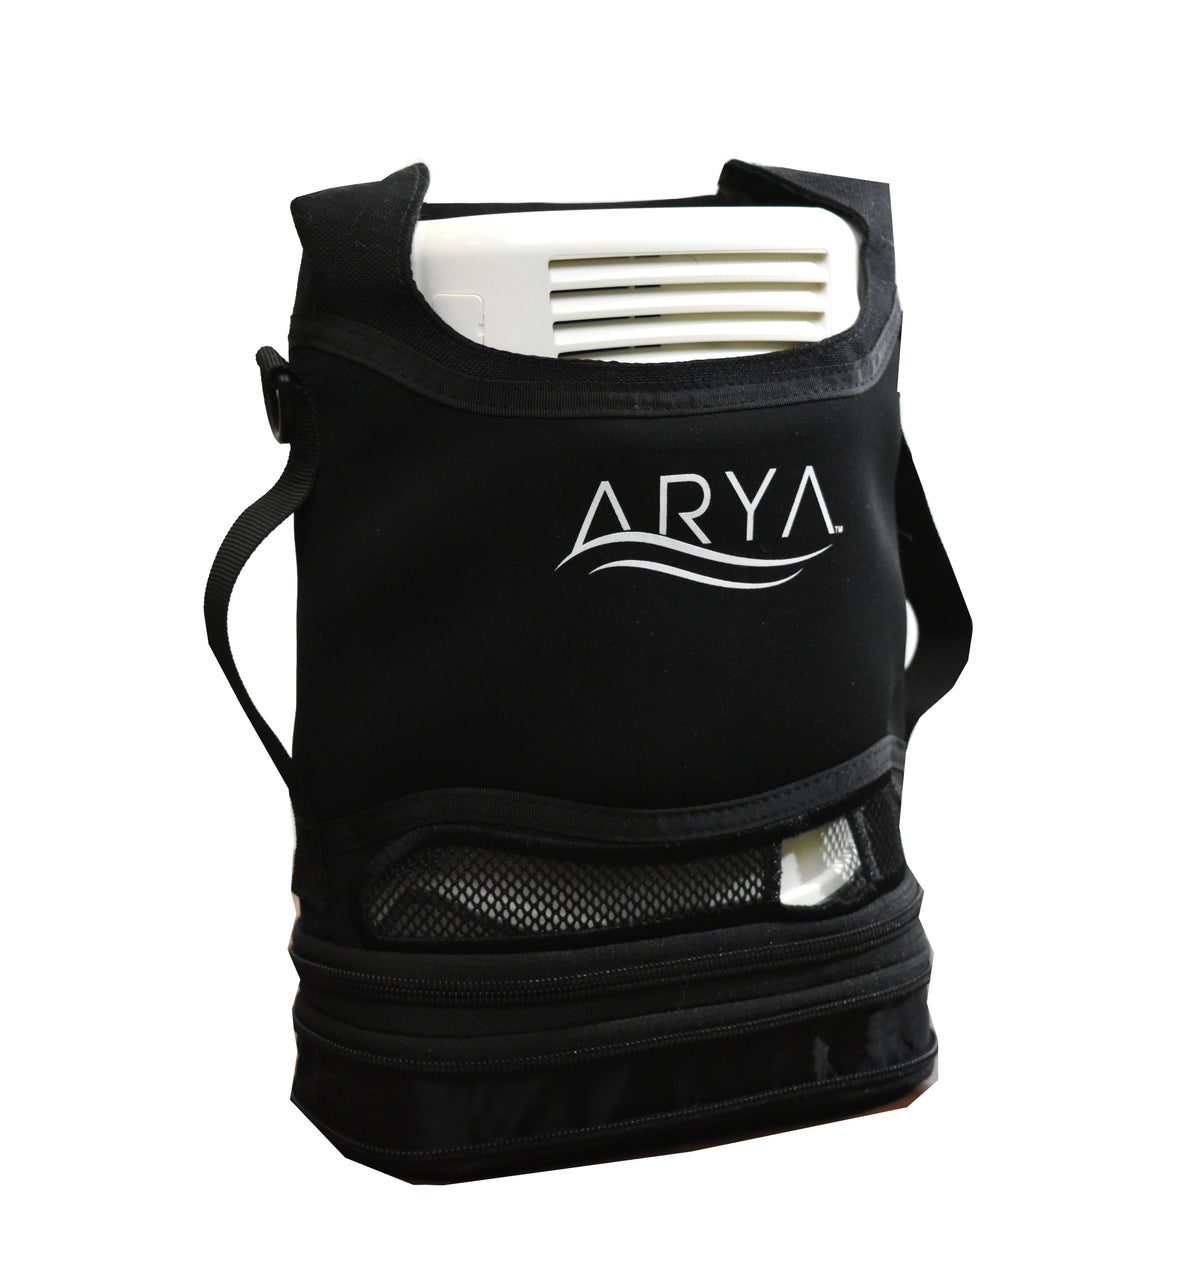 ARYA Go Portable Oxygen Concentrator